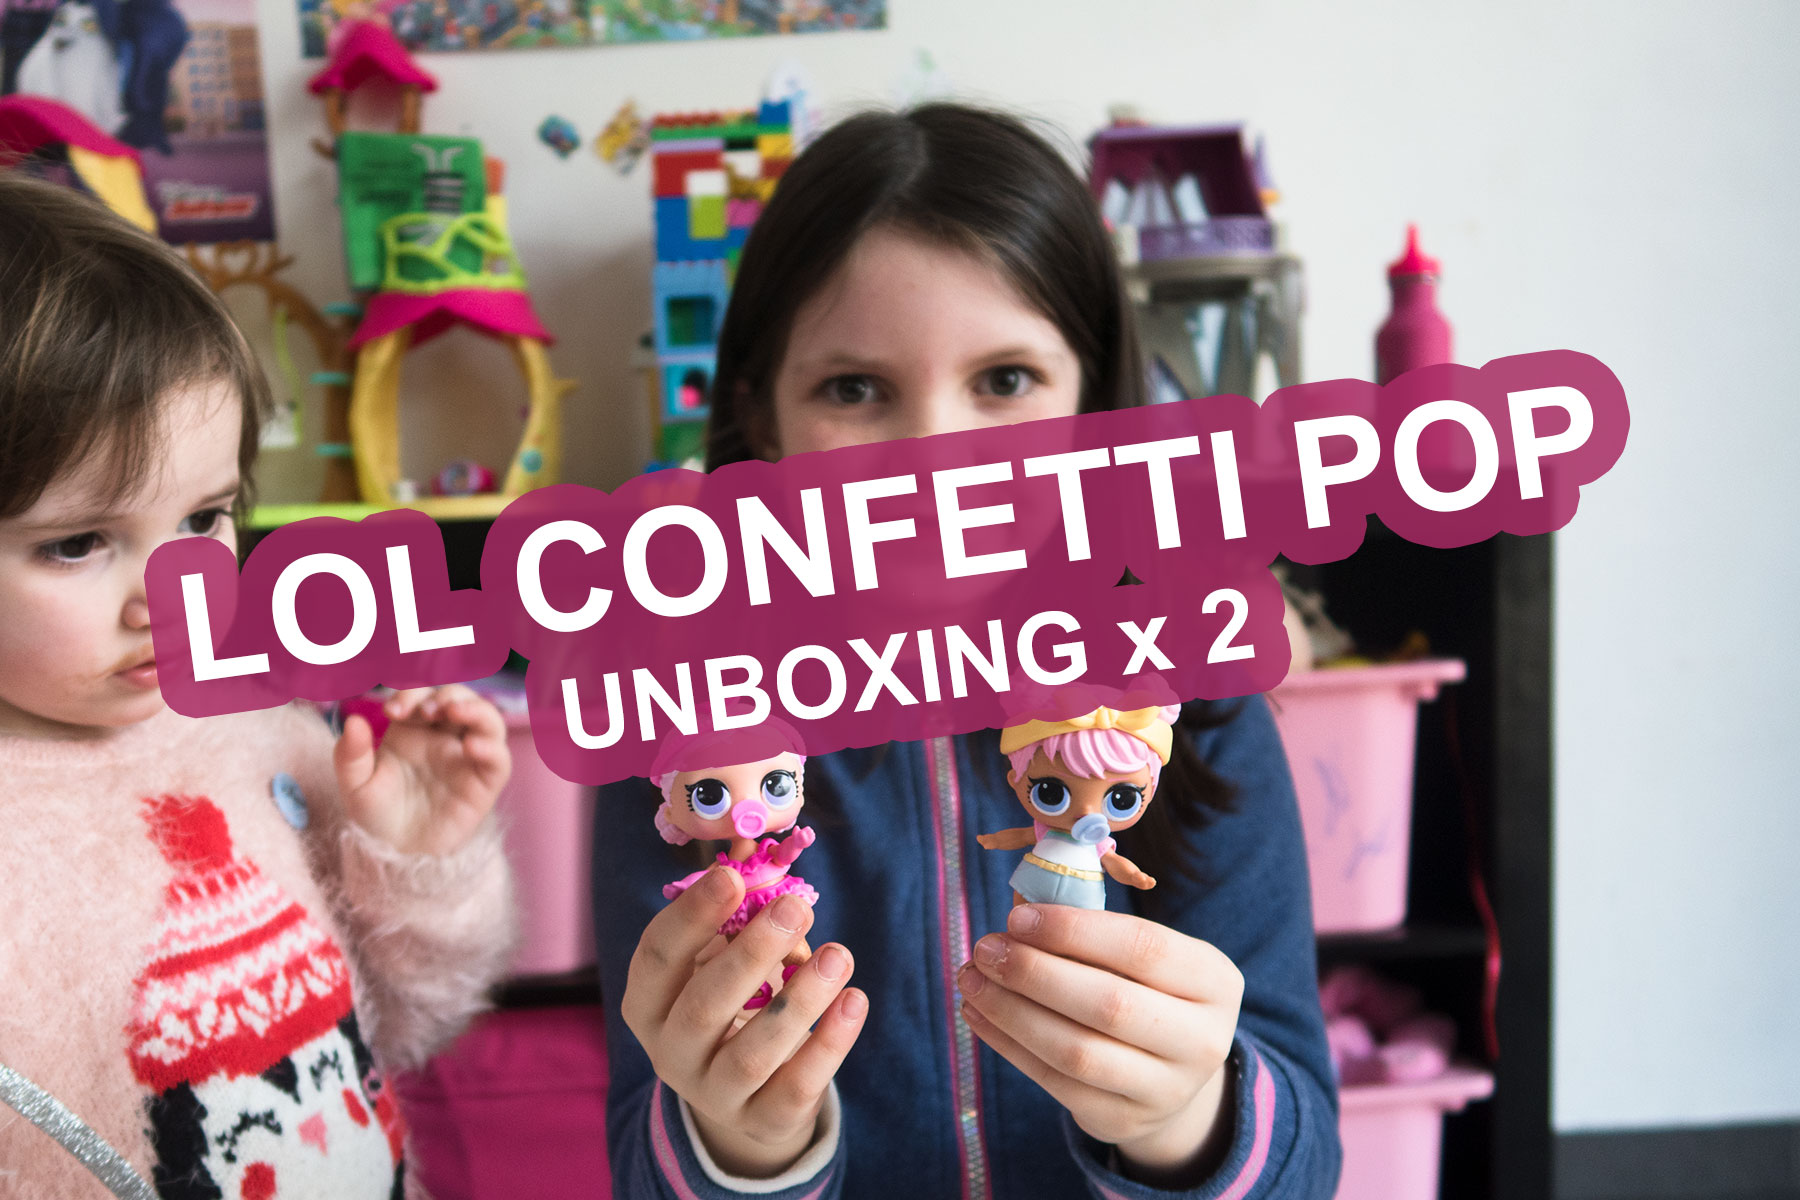 LOL Confetti POP Unboxing x 2 Sofie Lambrecht Mama Blog